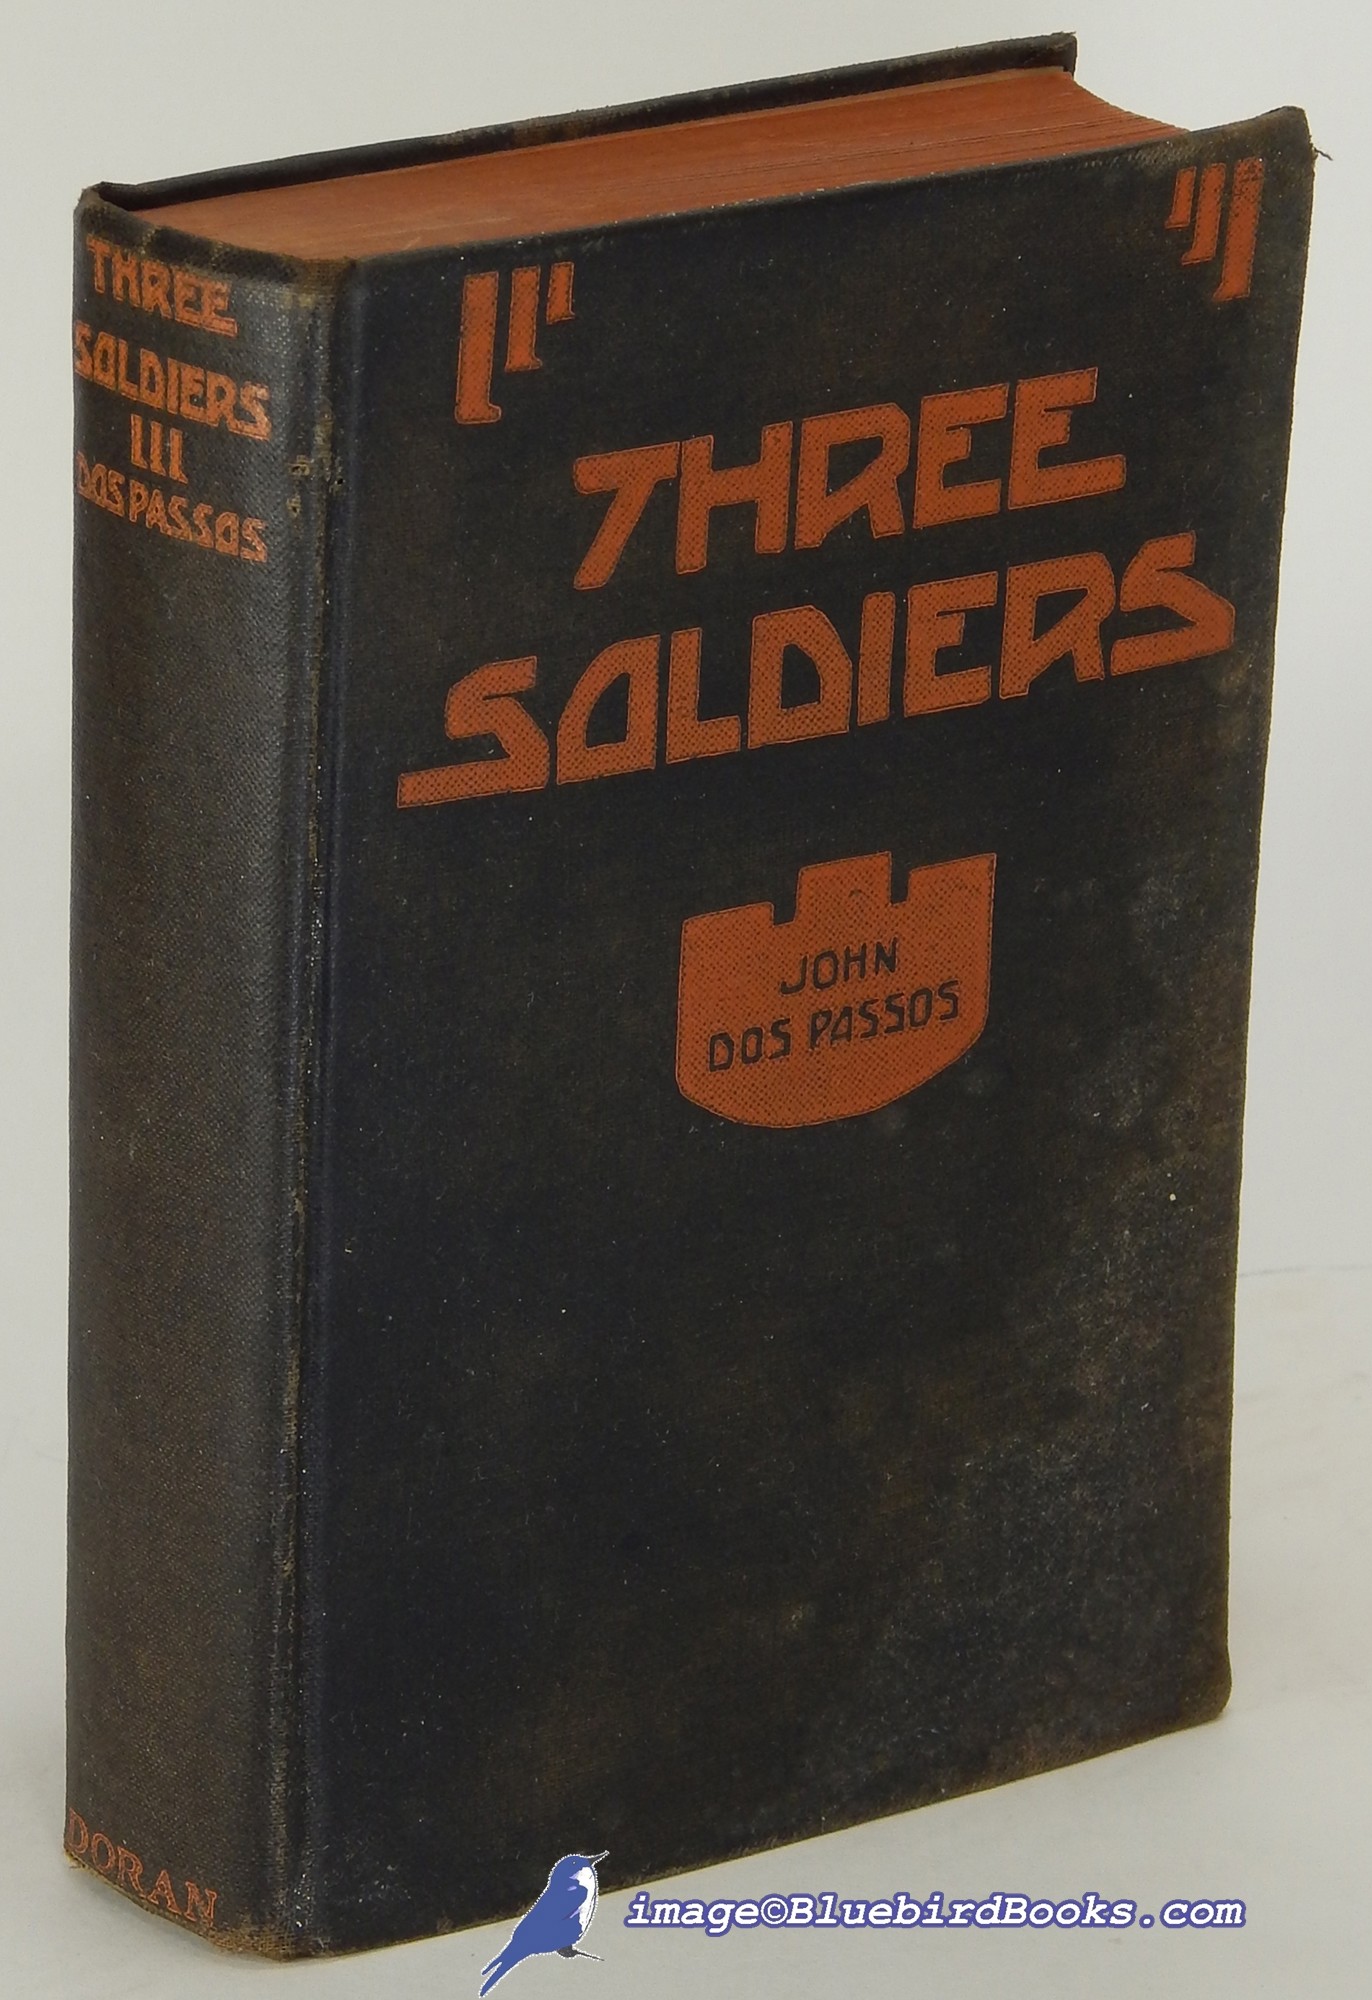 DOS PASSOS, JOHN - Three Soldiers